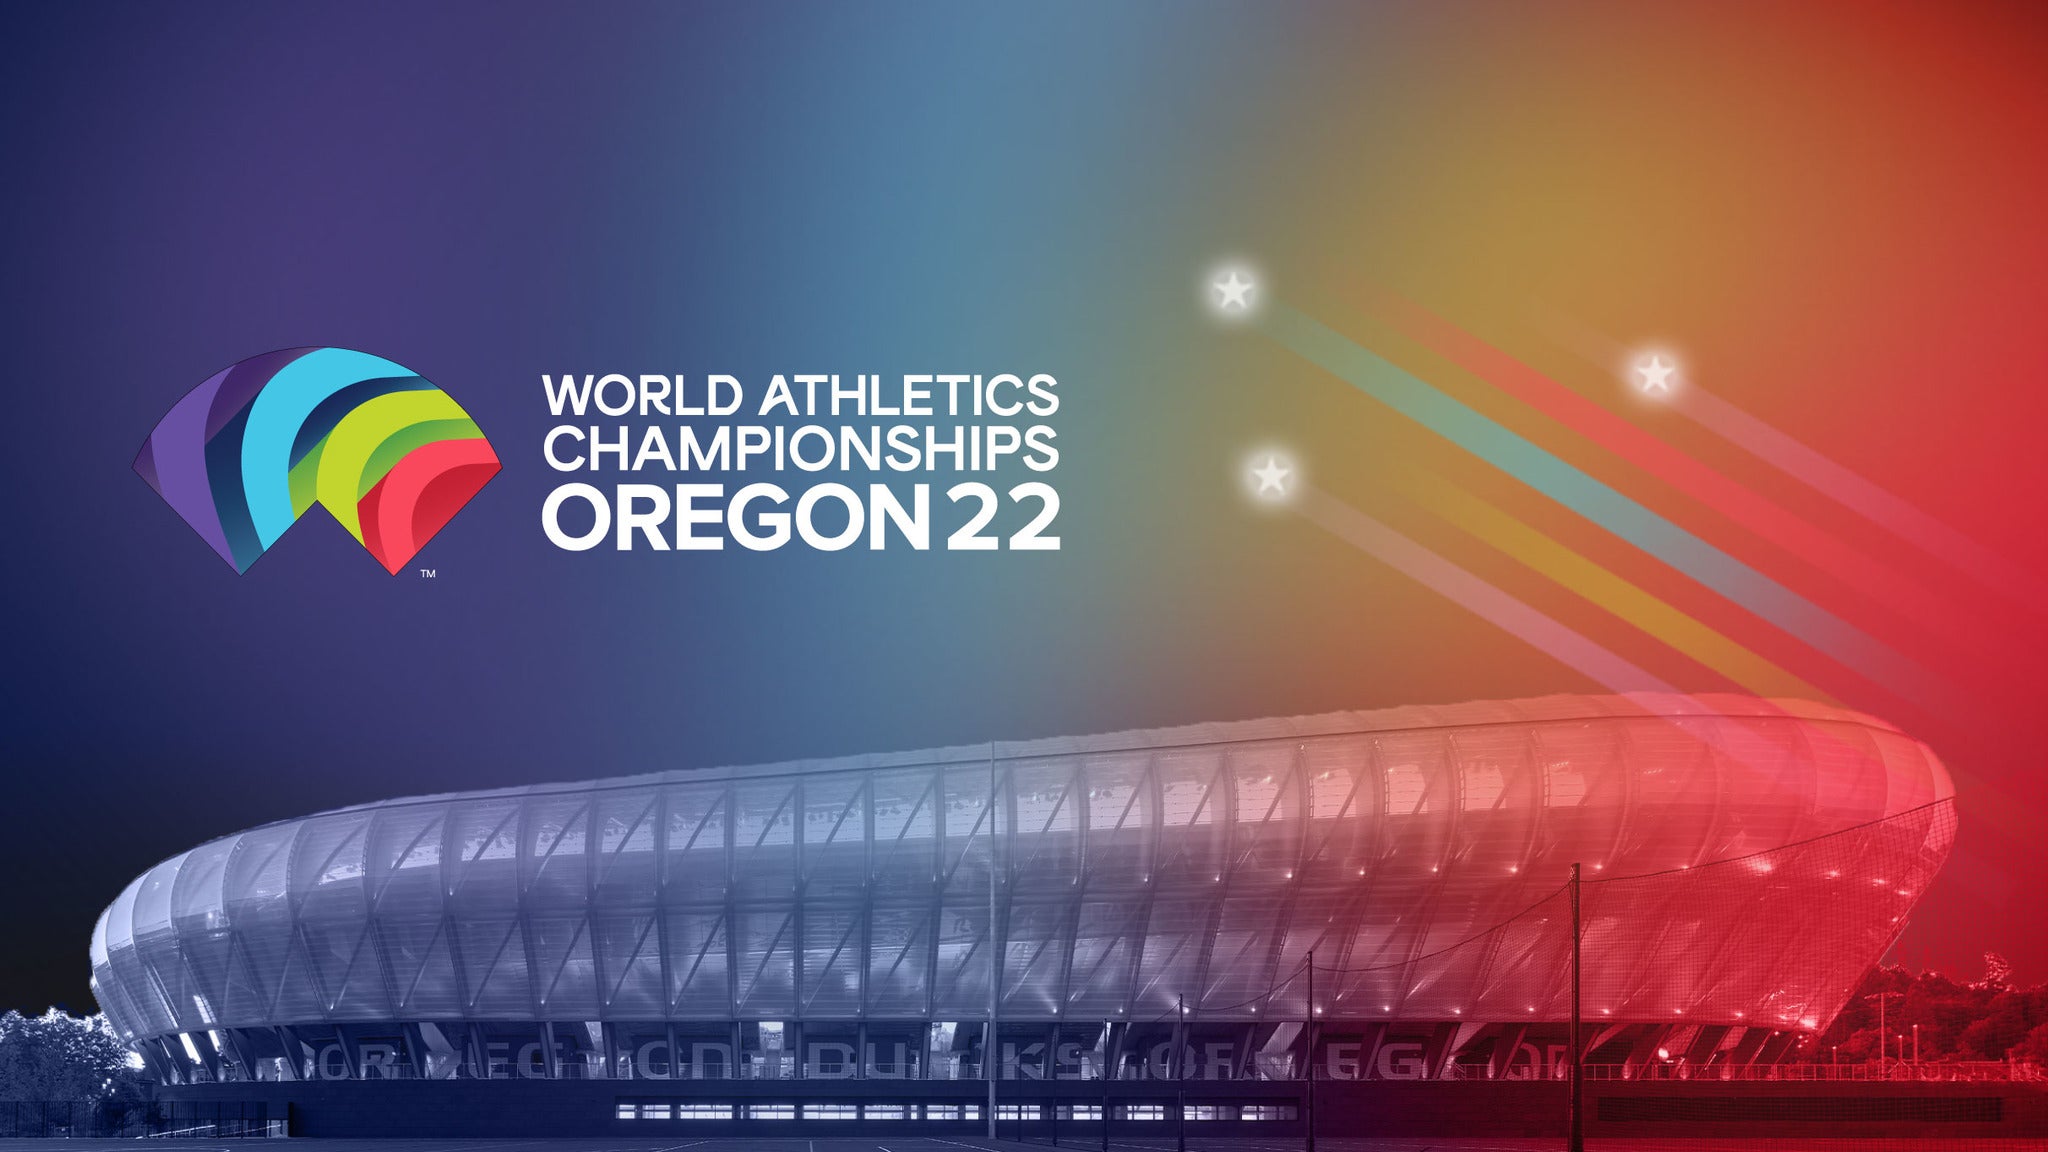 Oregon22 World Athletics Championships (Source: Ticketmaster.com)